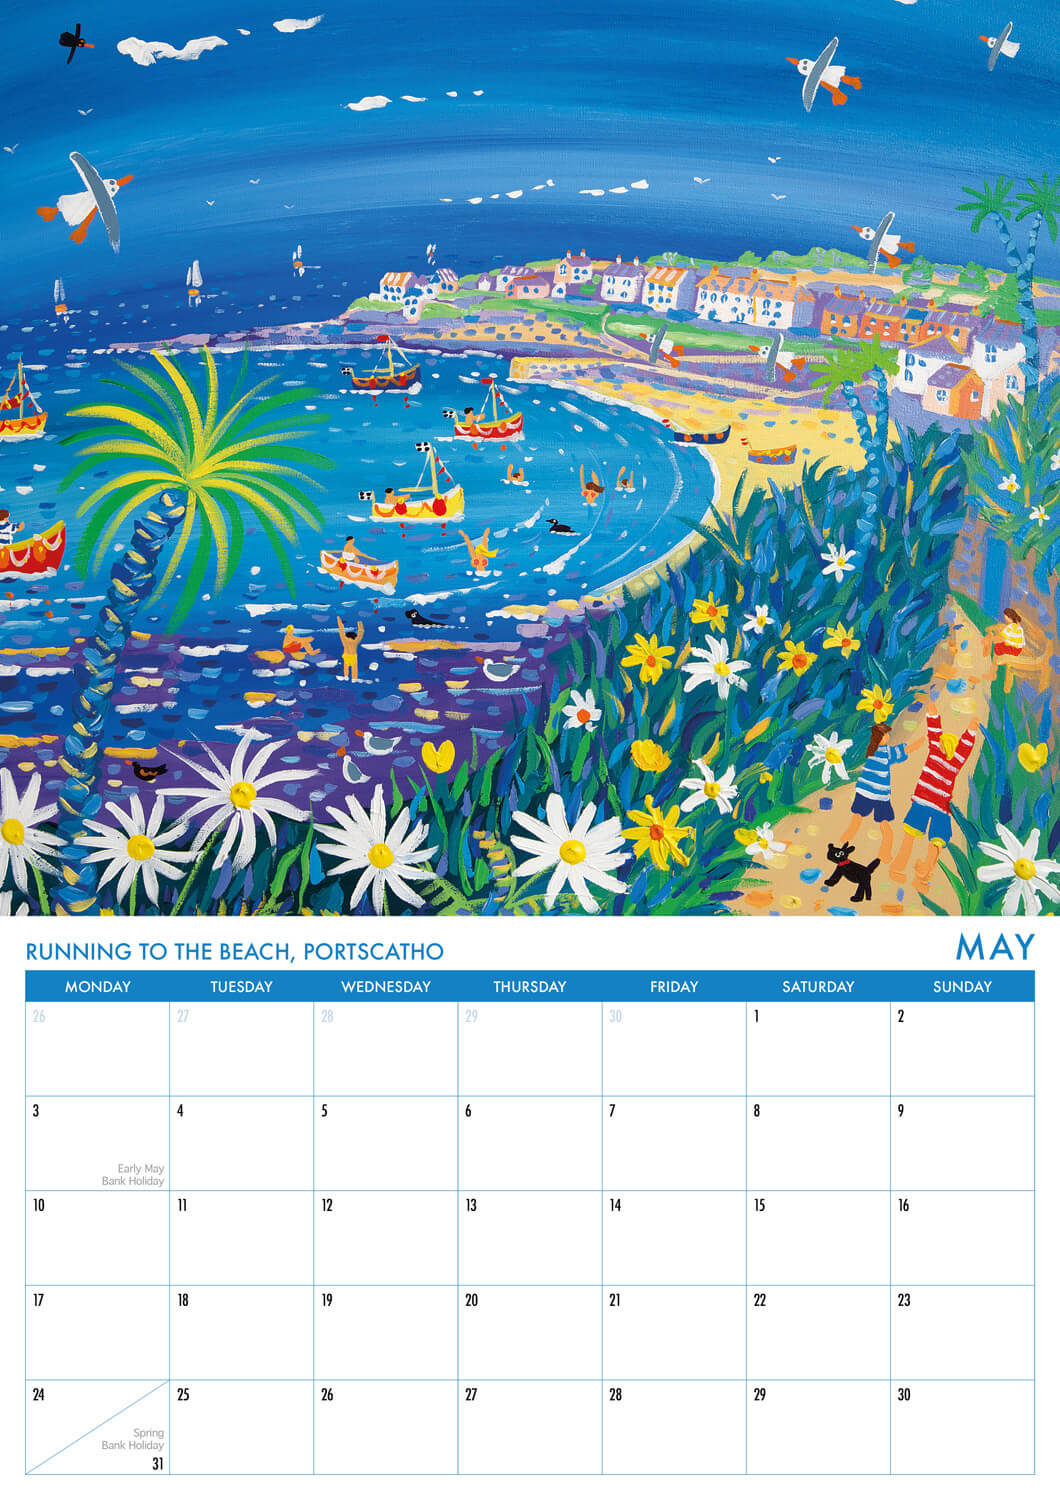 2021 Calendar of Cornwall by Cornish artist John Dyer